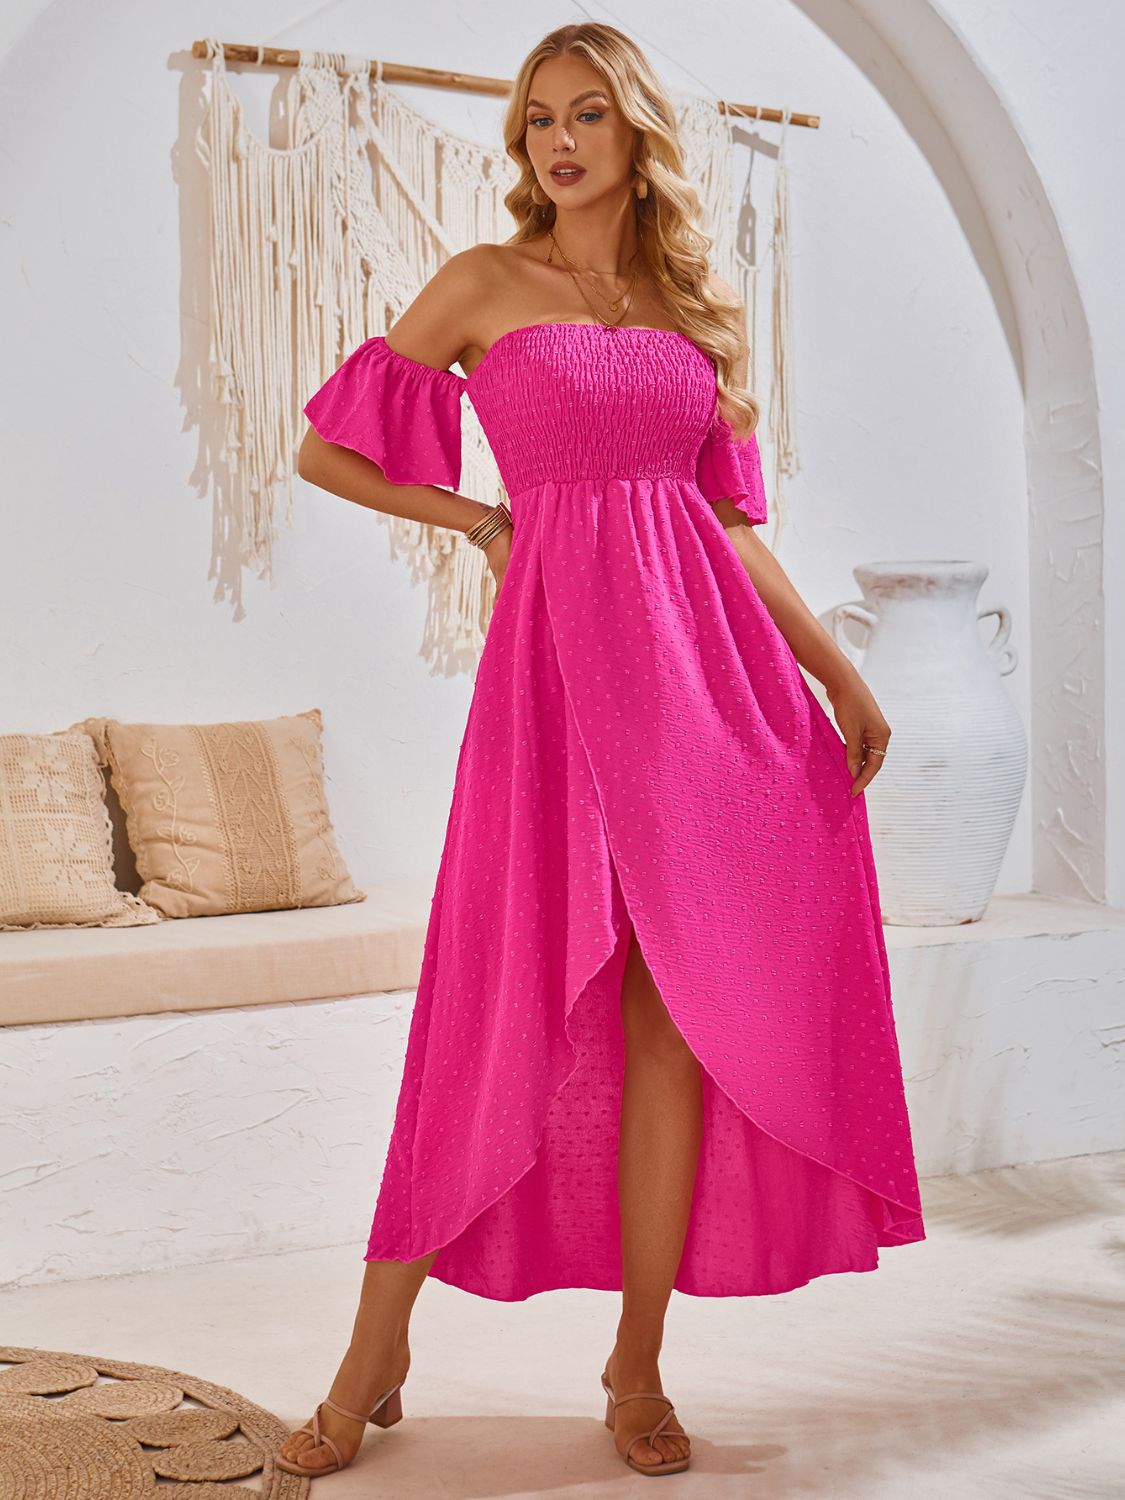 TEEK - High-Low Smocked Short Sleeve Dress DRESS TEEK Trend Hot Pink S 